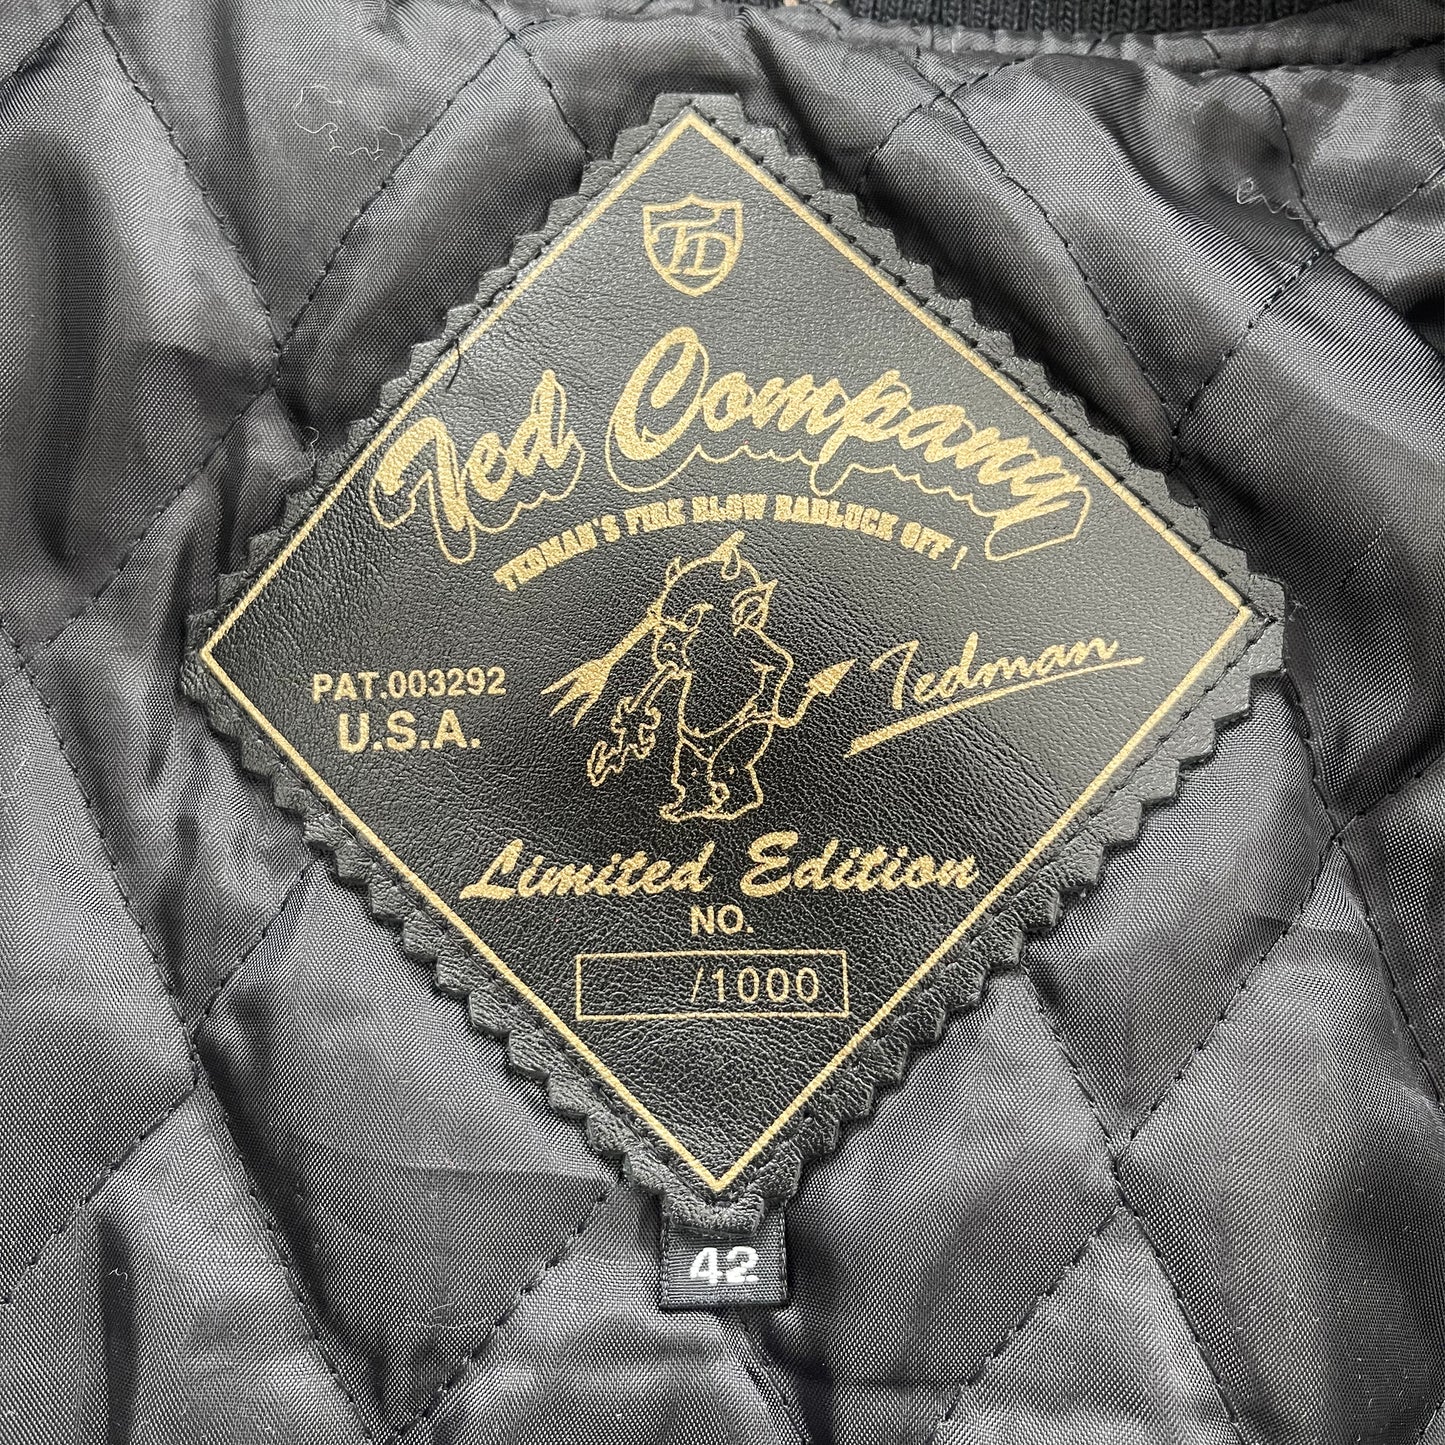 Tedman's Leather Varsity Jacket